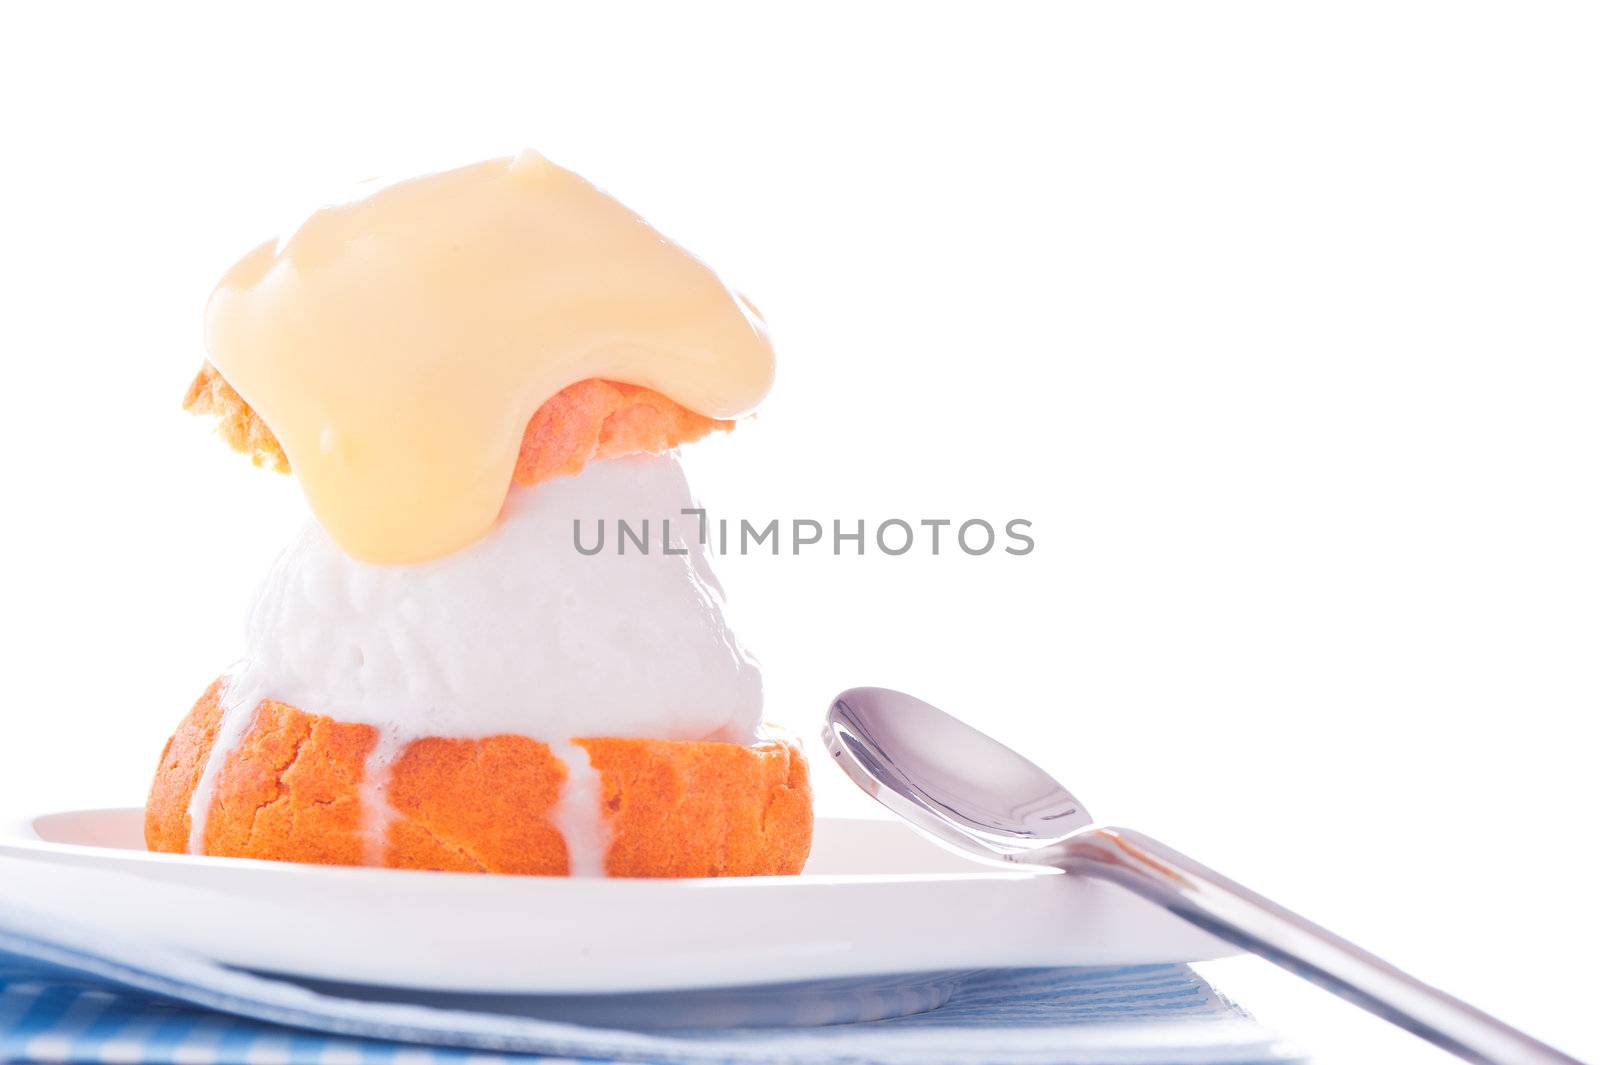 Profiterole in a small plate with ice cream vanilla sauce on a white backgound